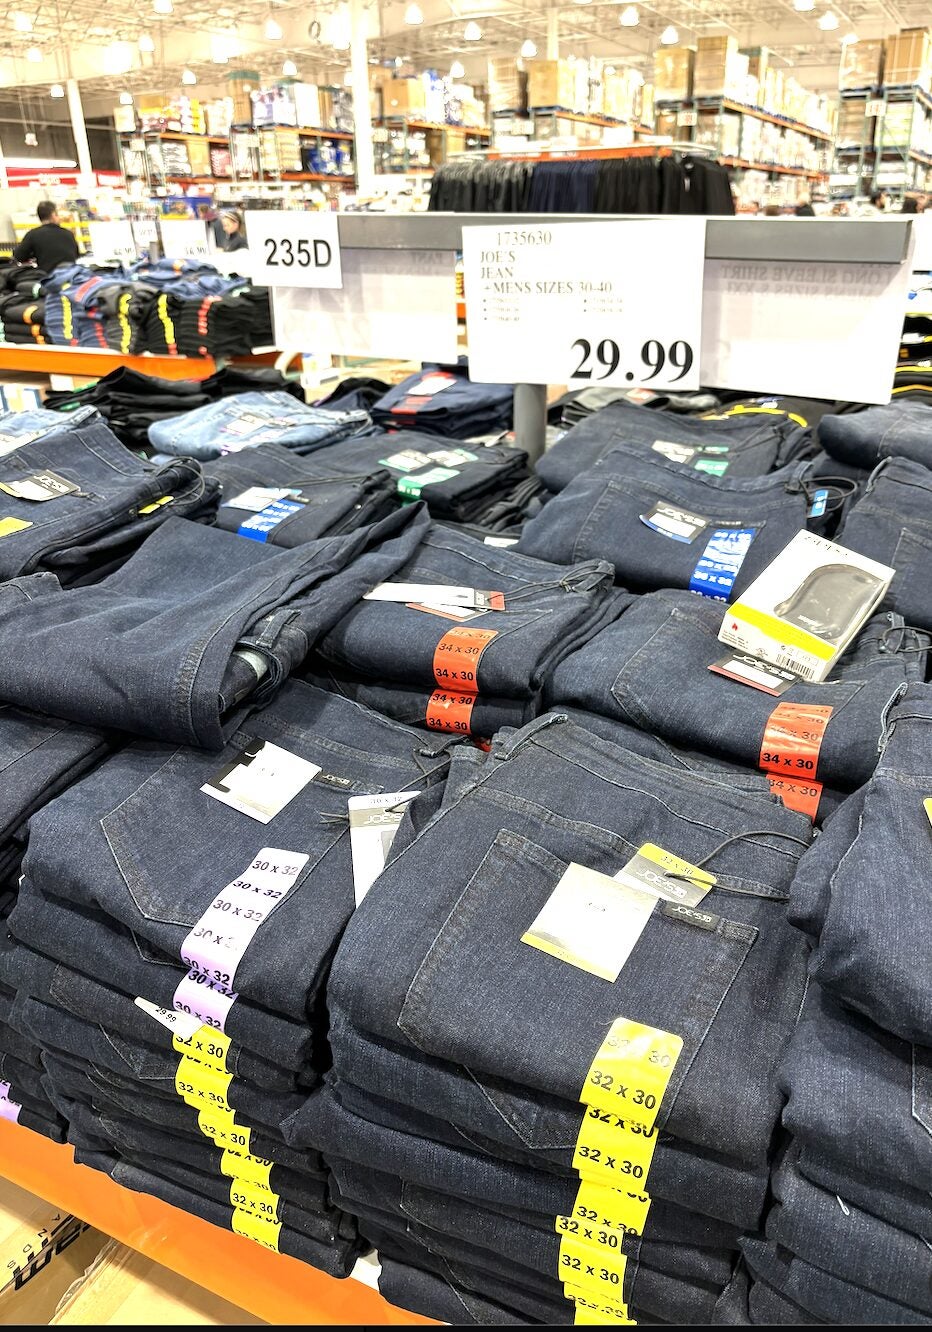 Costco] Joe's Jeans (men's) $29.99 (YMMV) - RedFlagDeals.com Forums